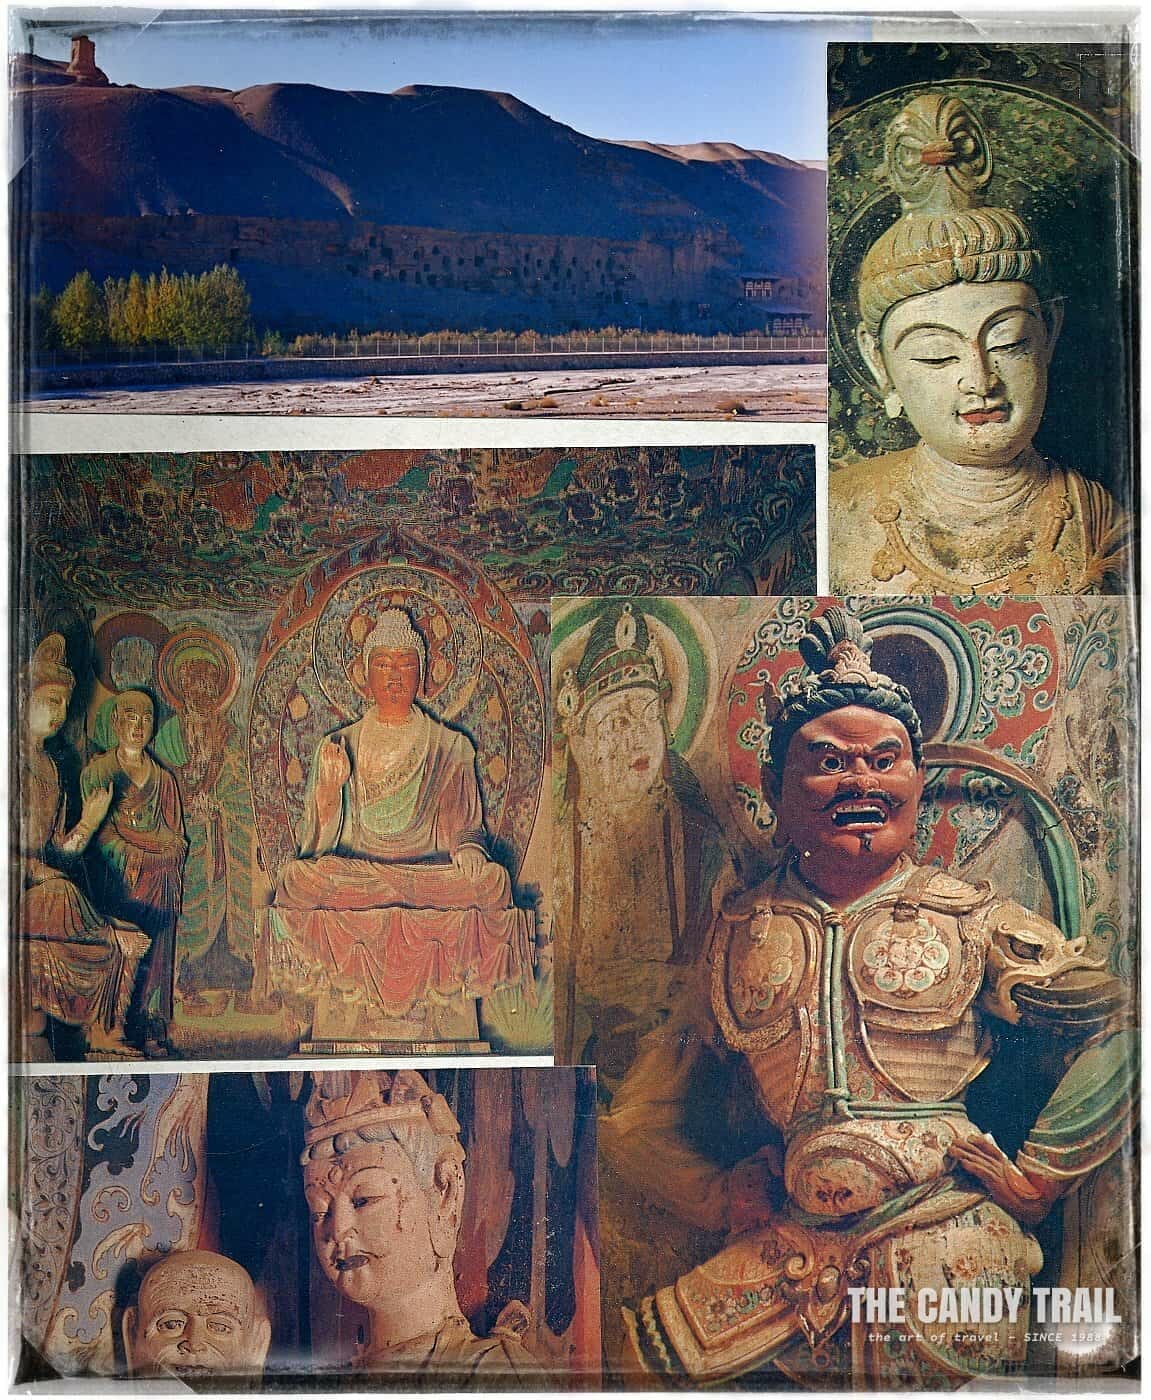 thousand-buddh acaves dunhuang-china